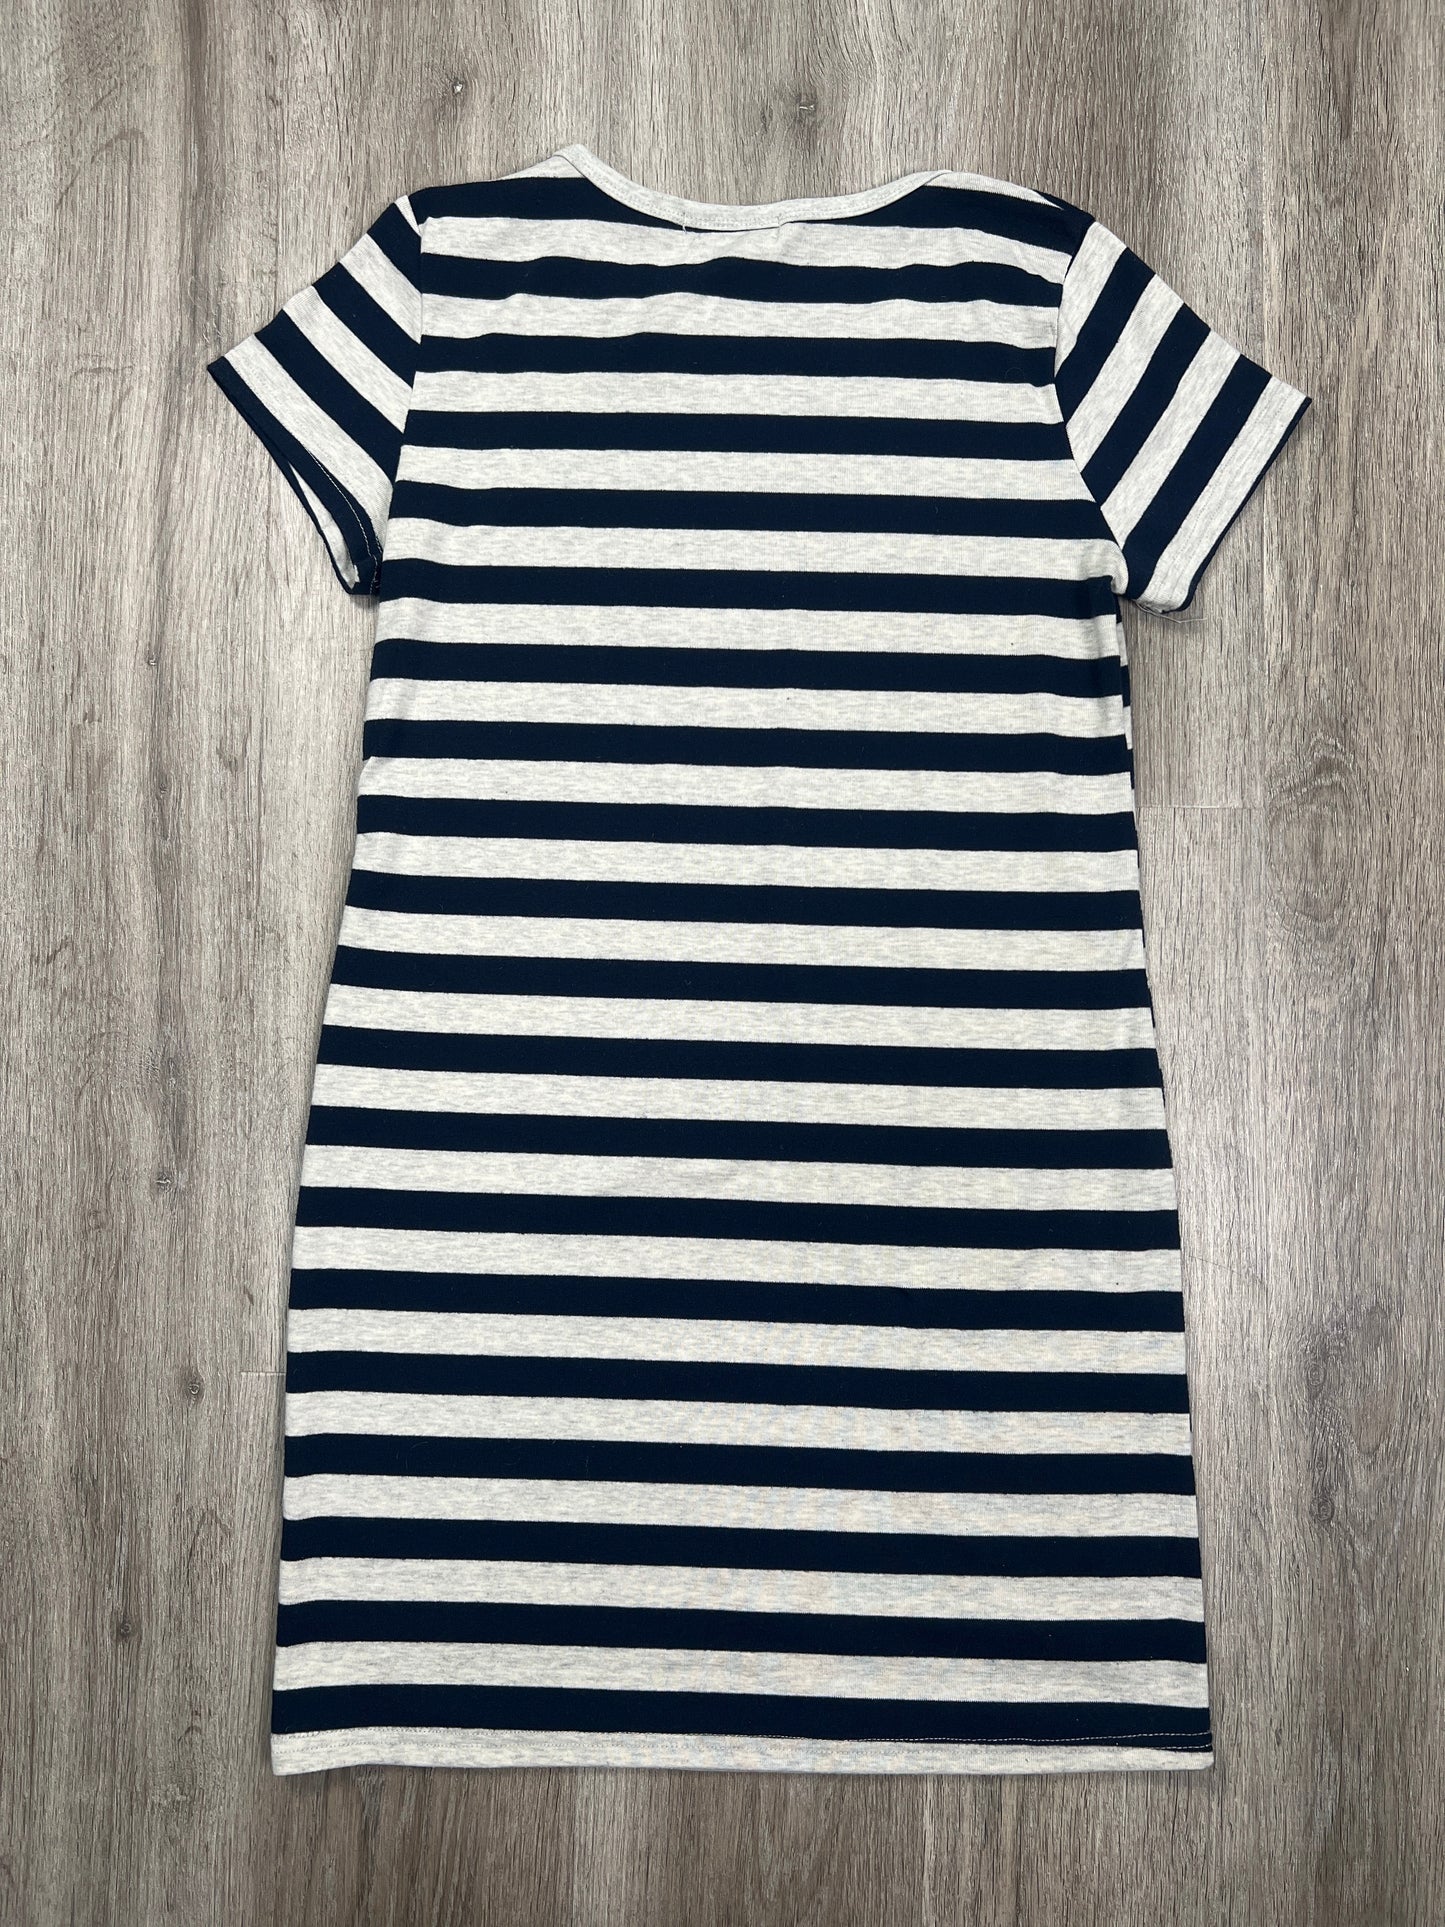 Striped Pattern Dress Casual Short AZZ, Size S